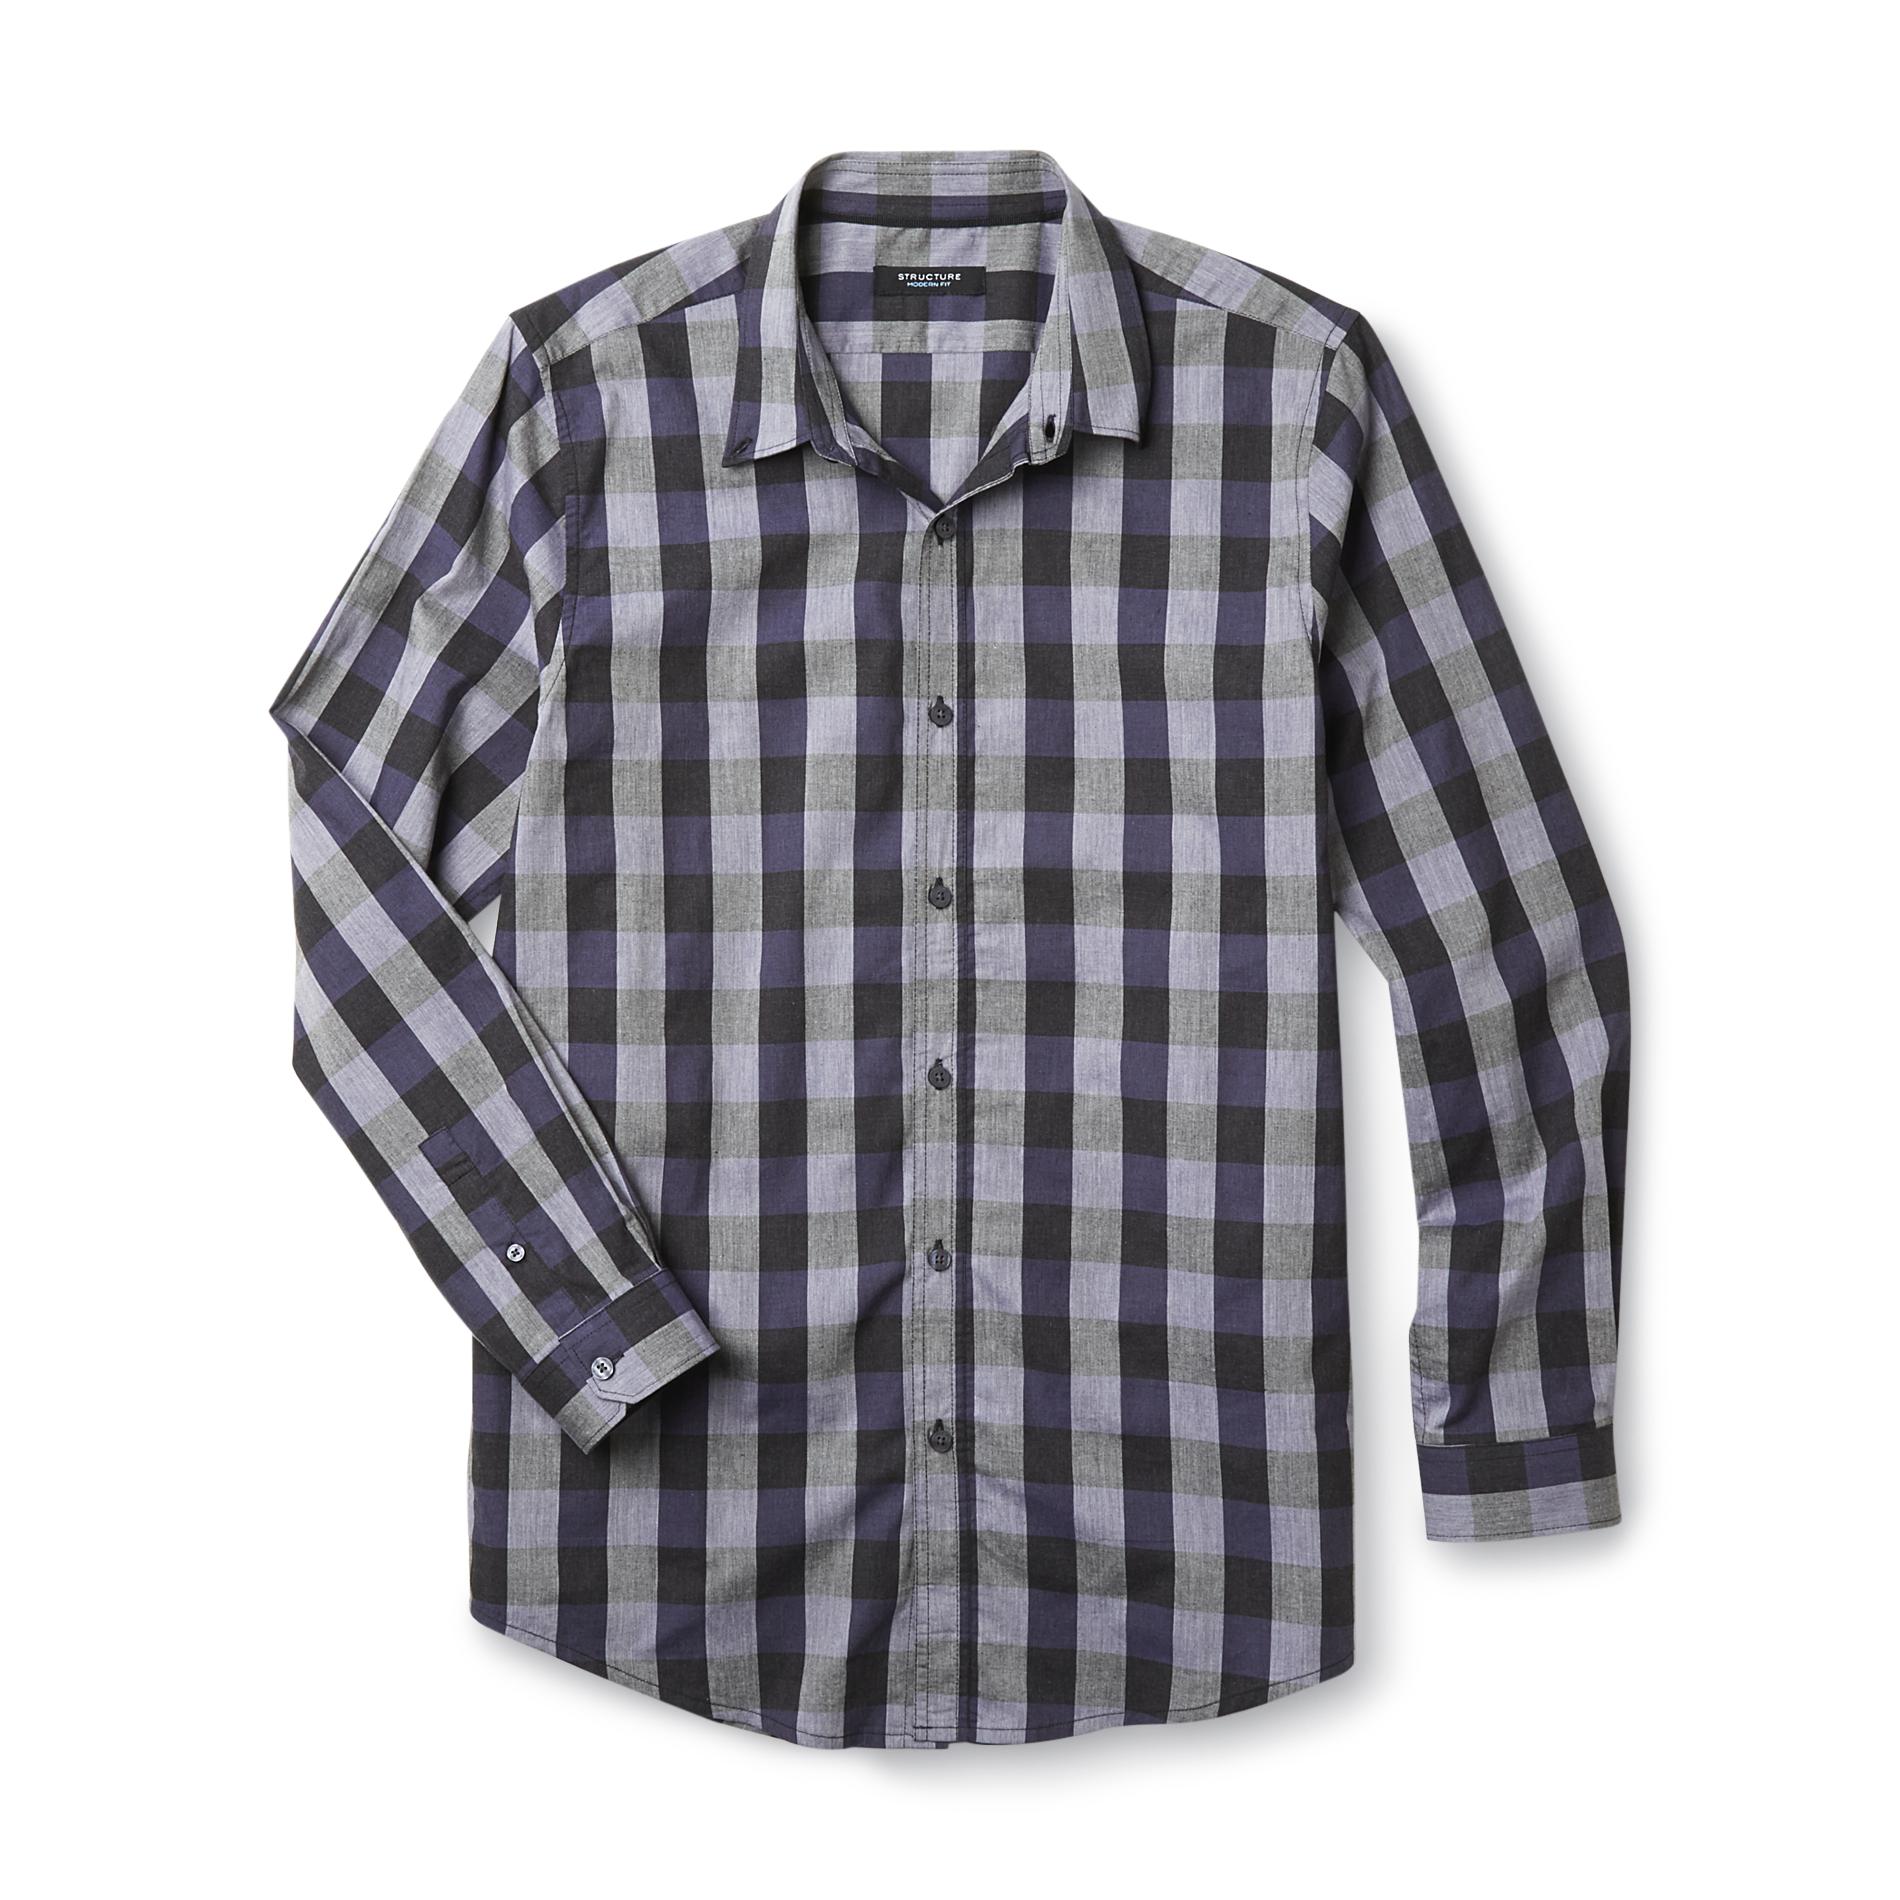 Structure Men's Shirt - Checkered